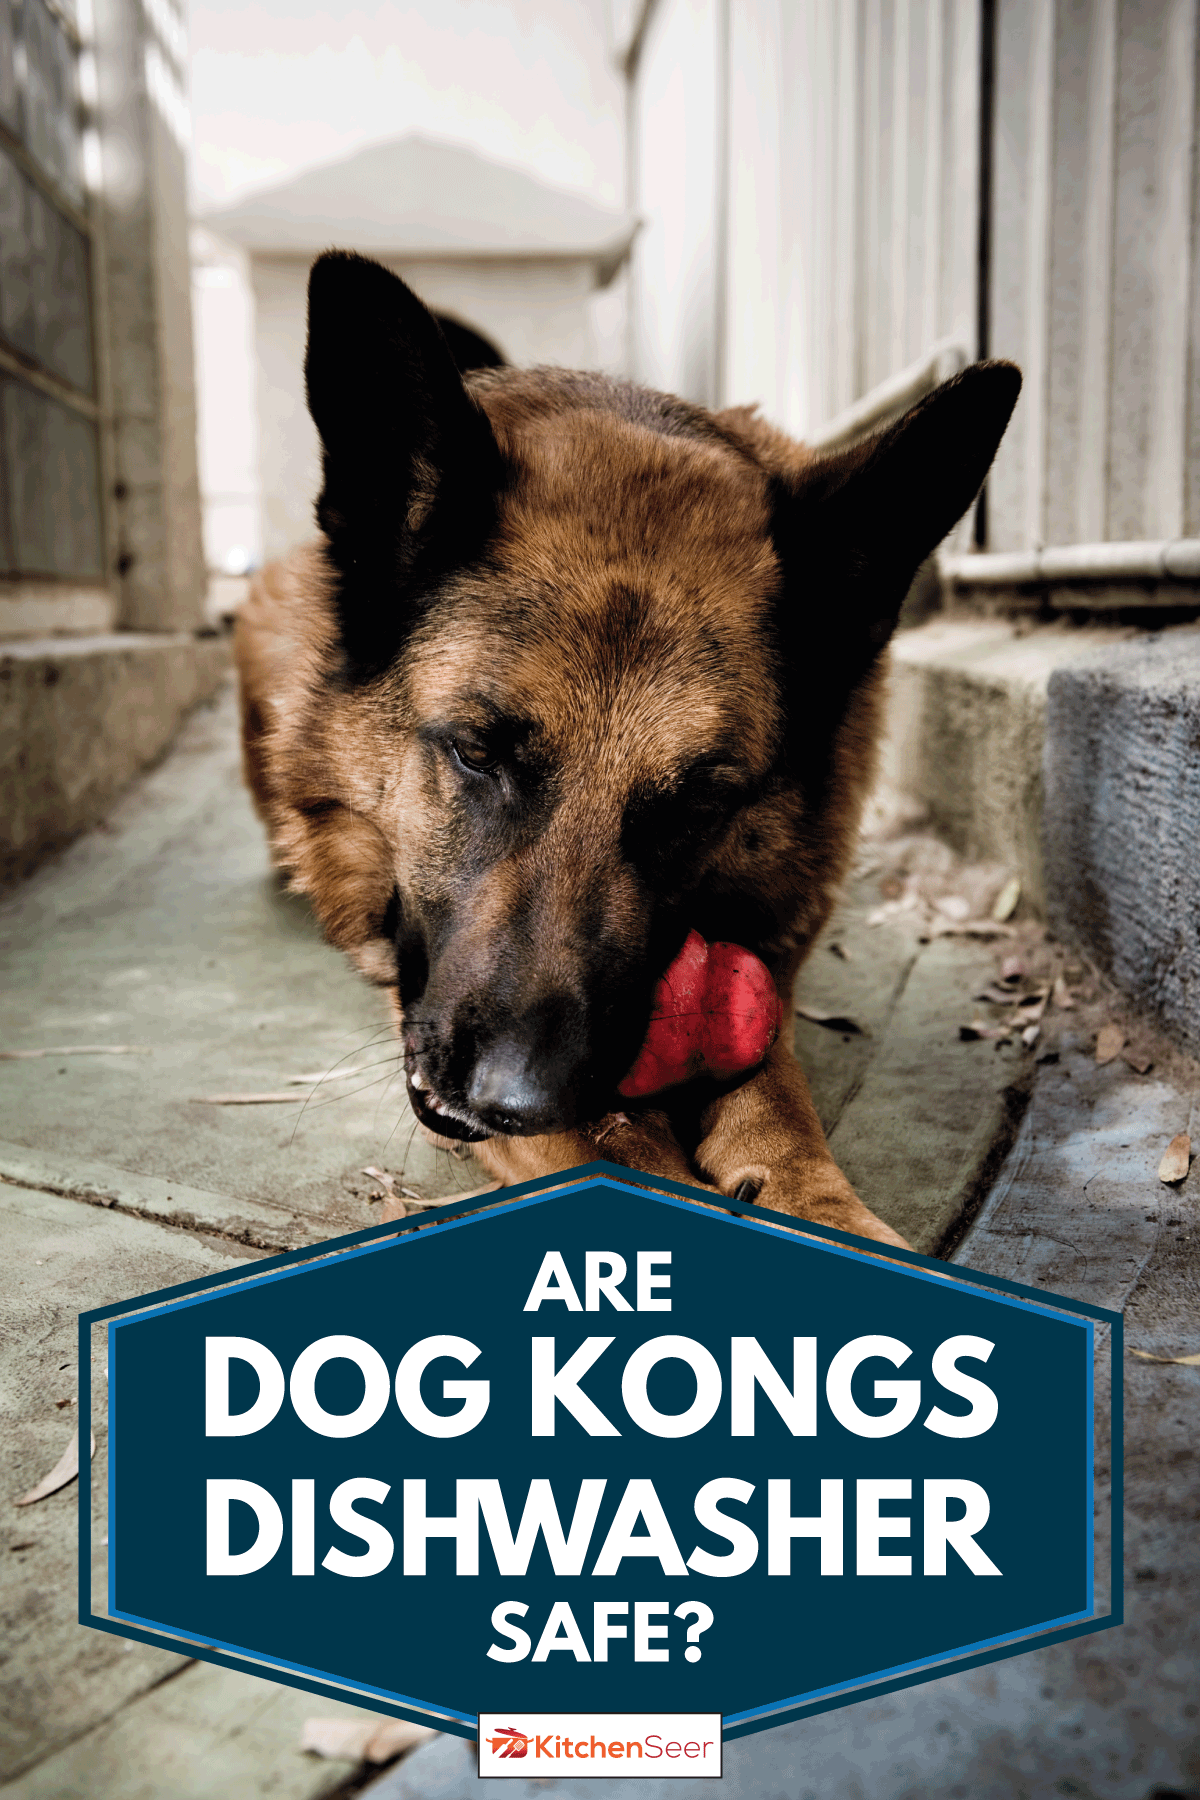 German Shepherd dog chewing dirty chew Dog Kong toy, Are Dog Kongs Dishwasher Safe?